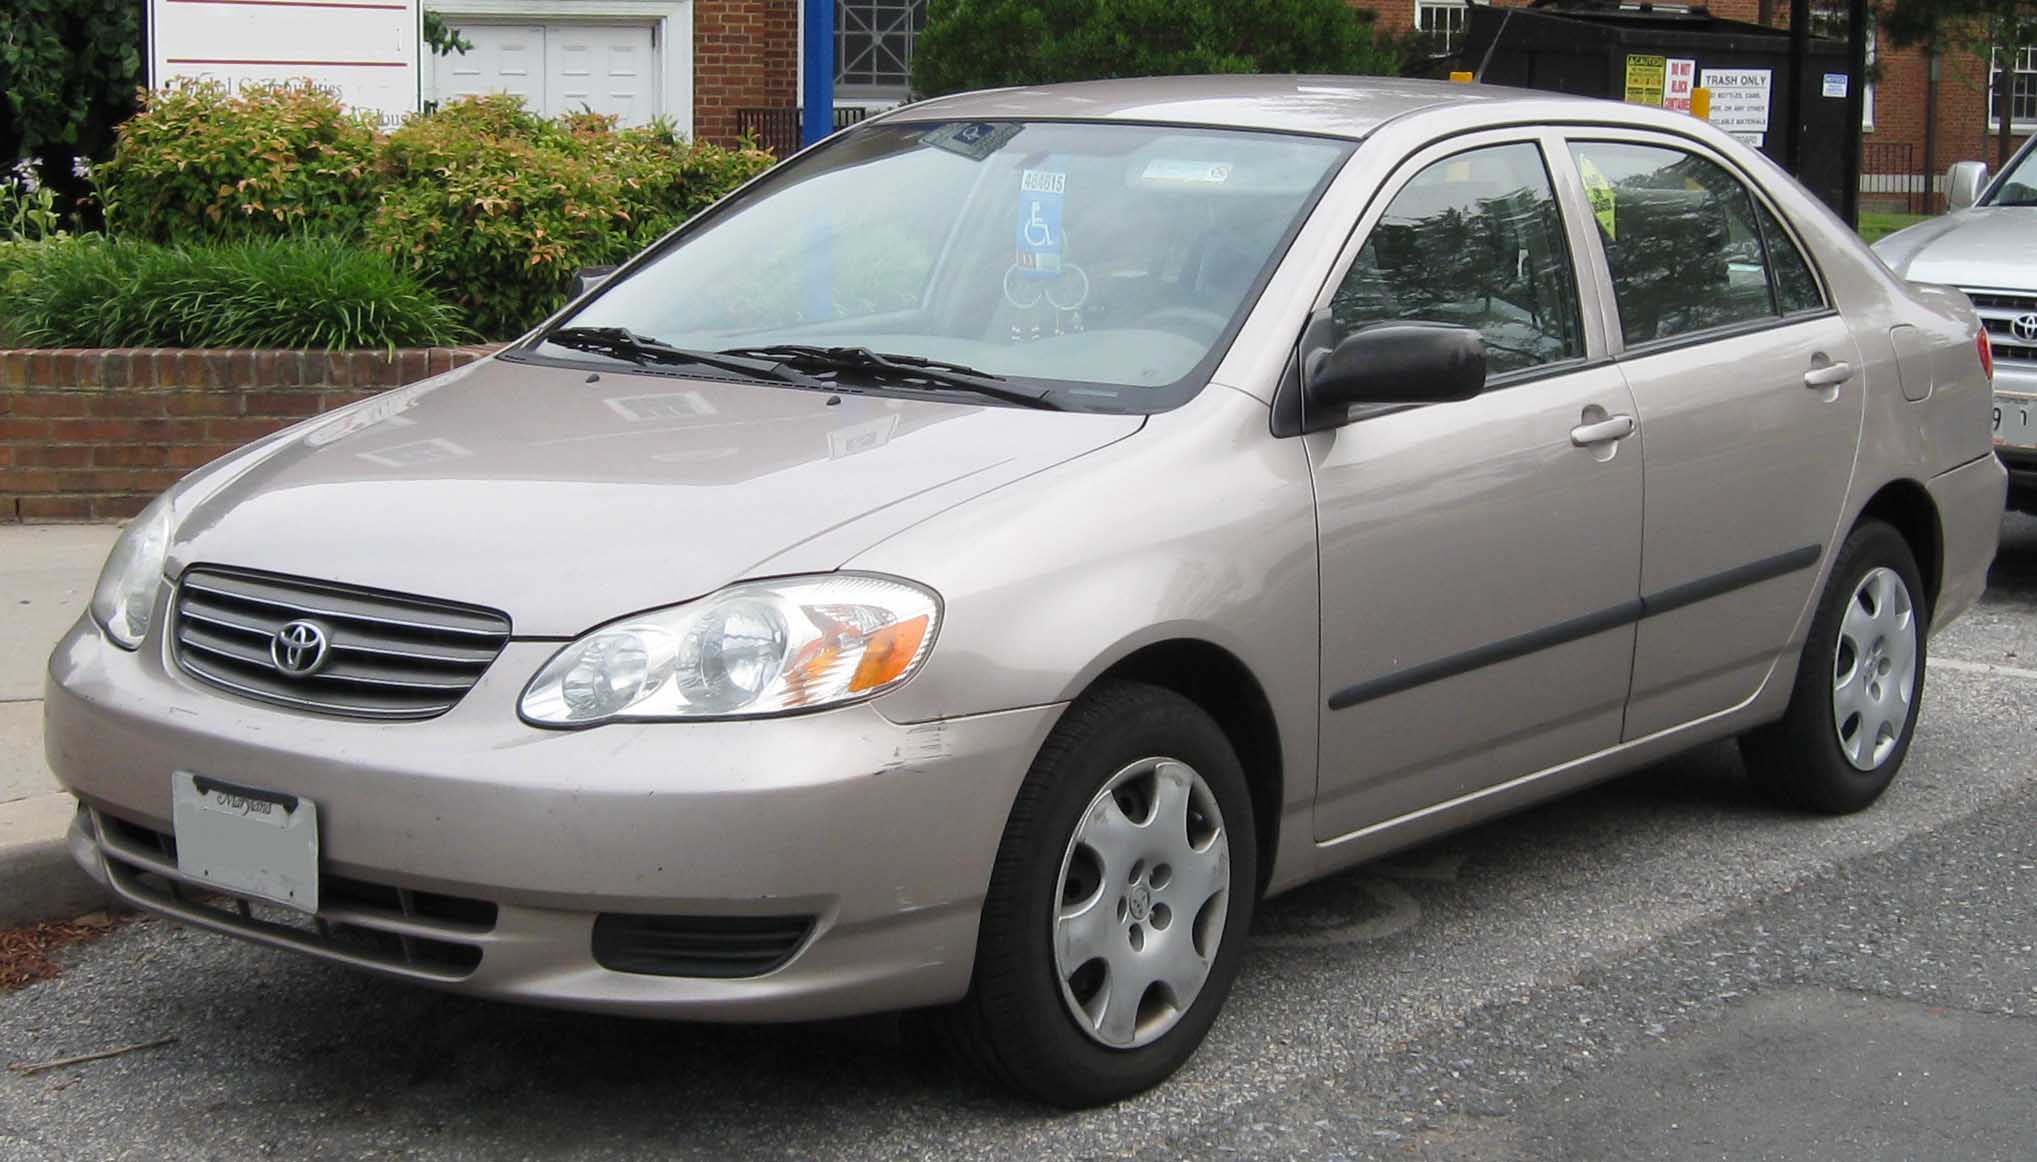 Dossier: Toyota Corolla CE 2003-2004.jpg